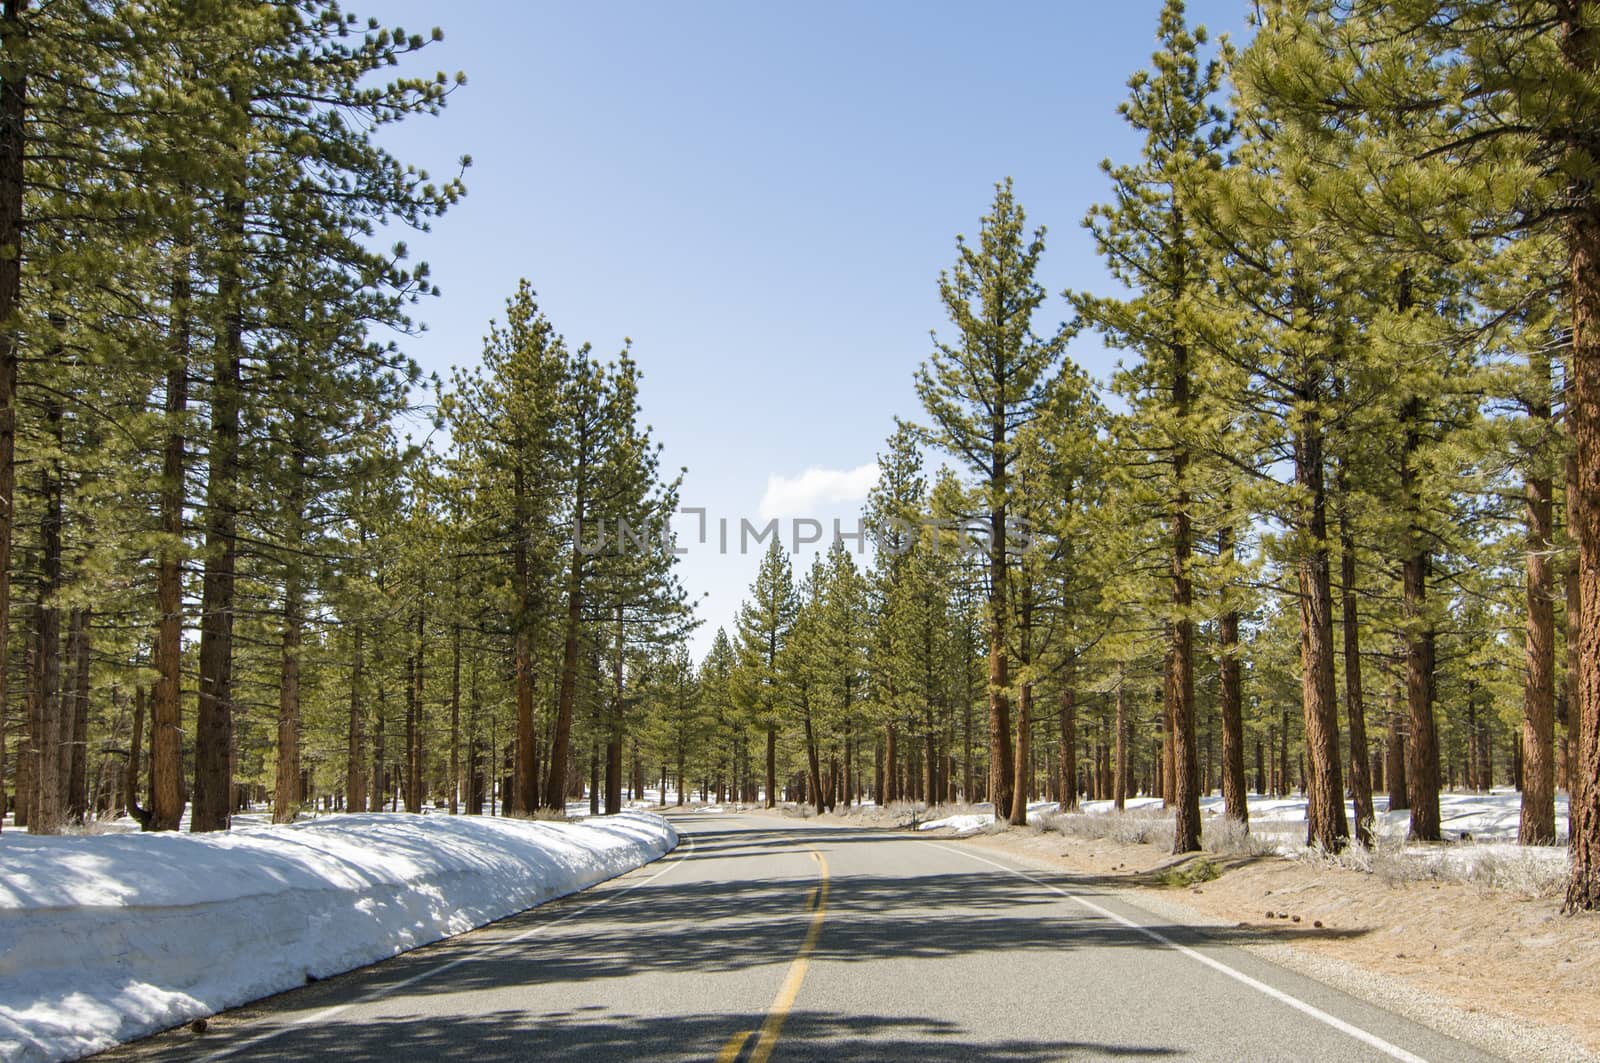 Road through winter forest near Mono Lake, California by Njean